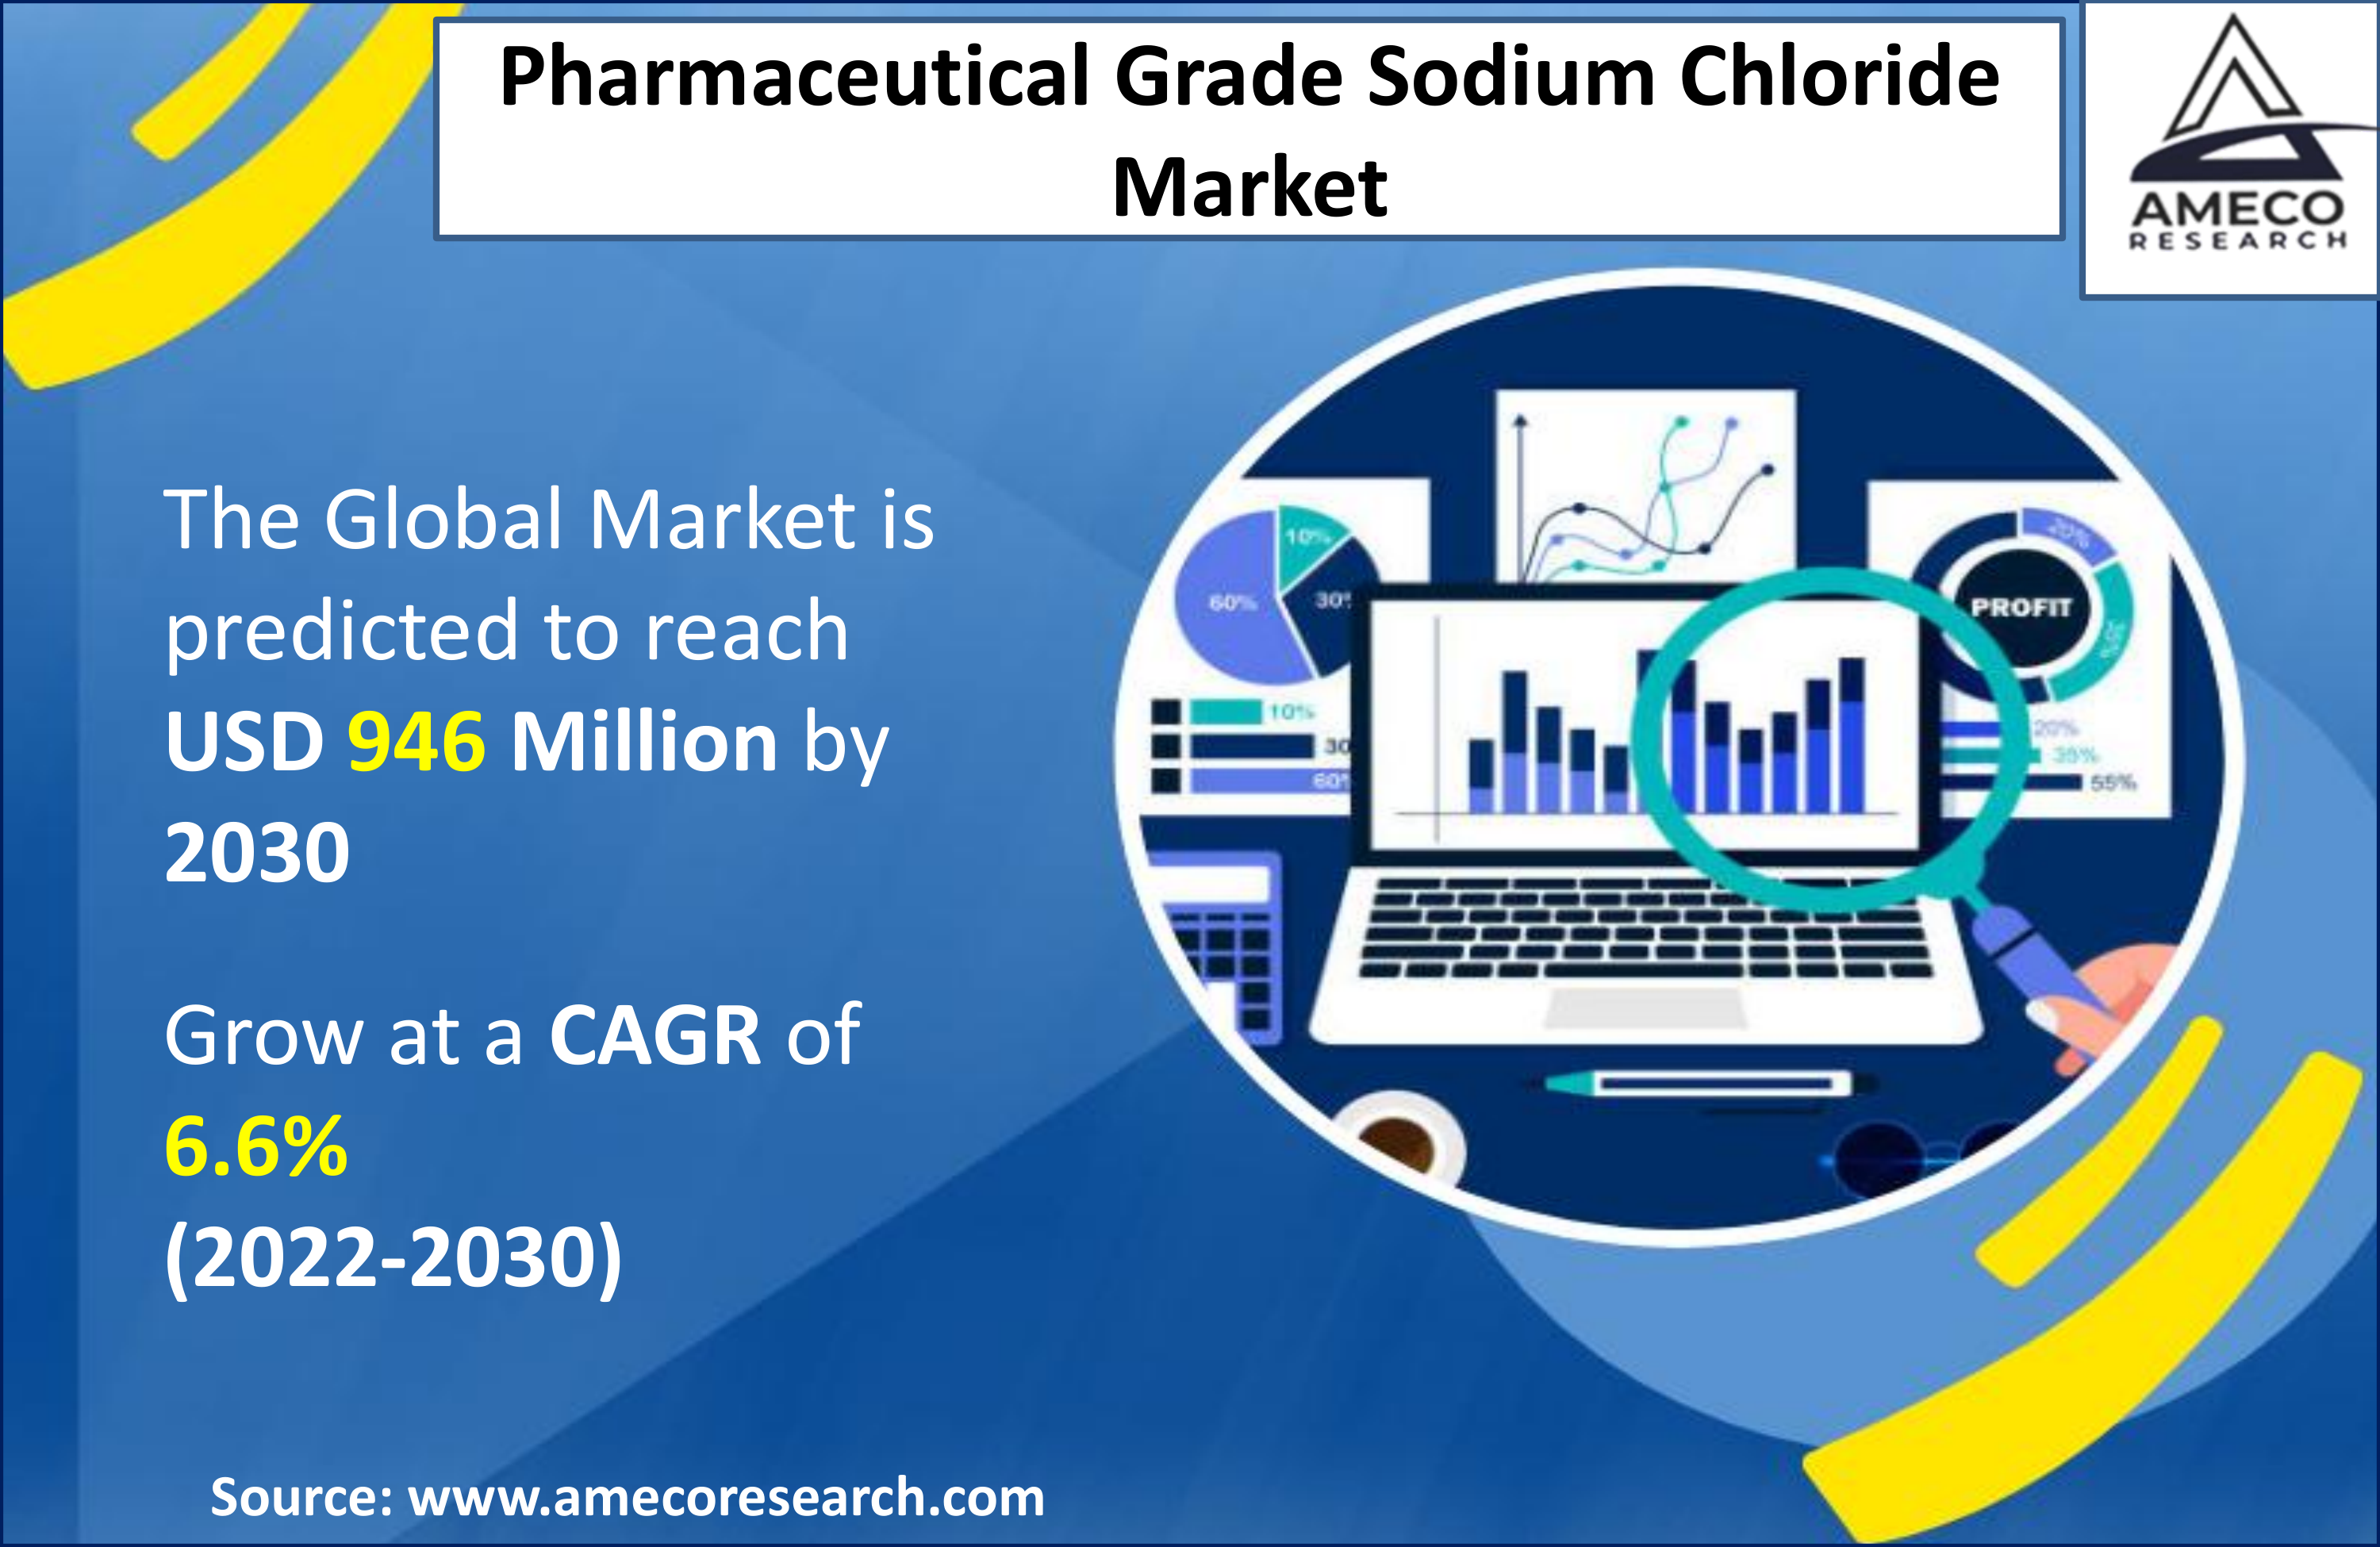 Pharmaceutical Grade Sodium Chloride Market